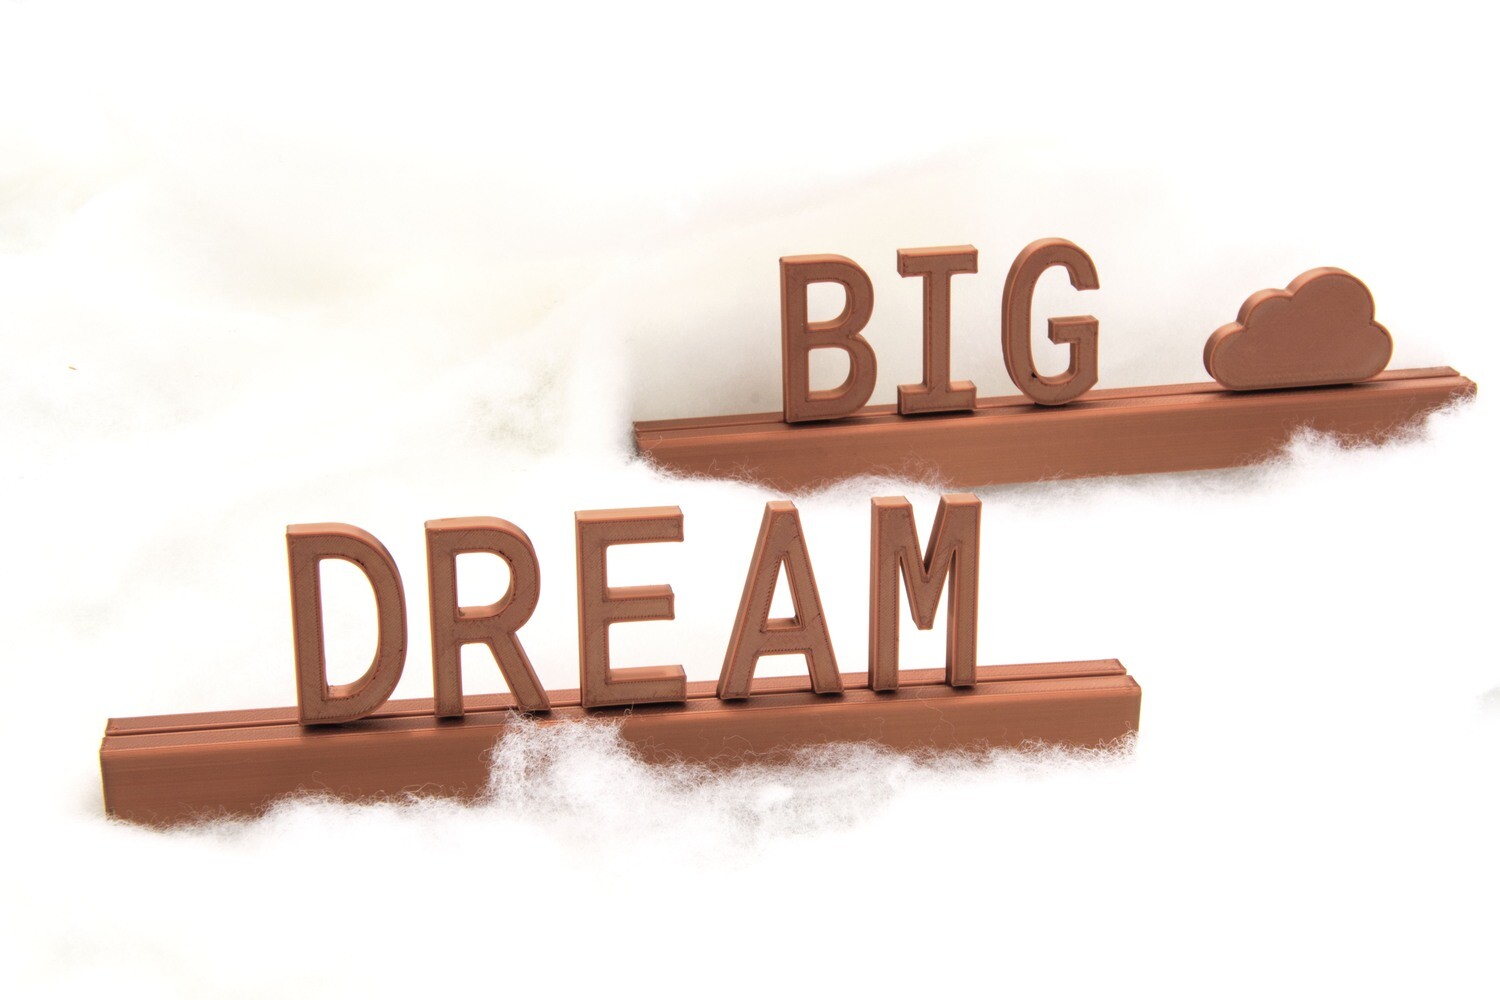 "Dream big"